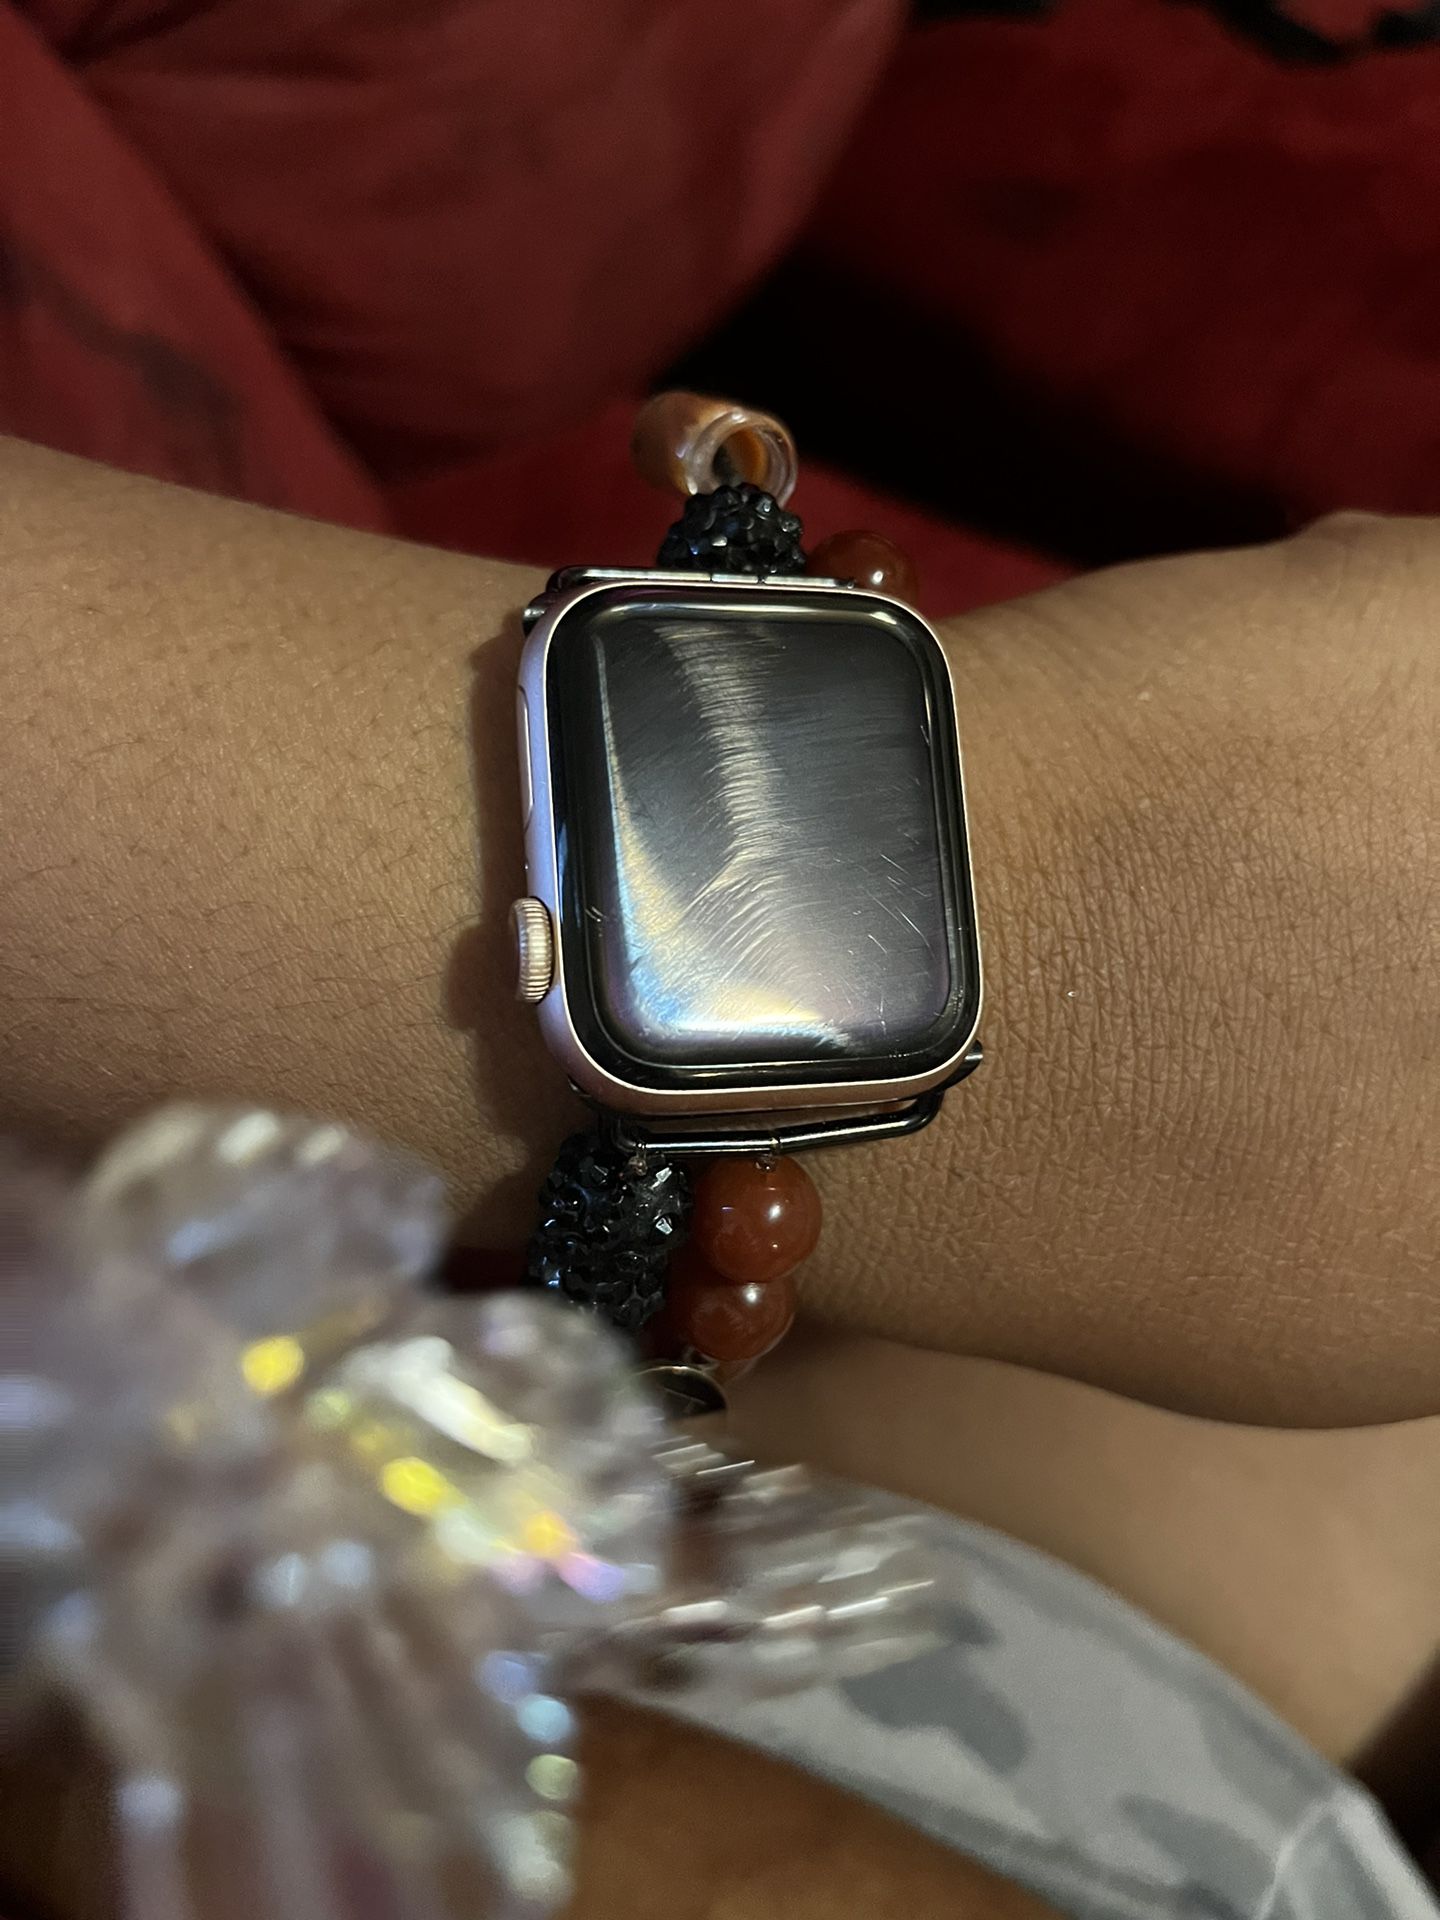 Apple Watch Series 4 40mm